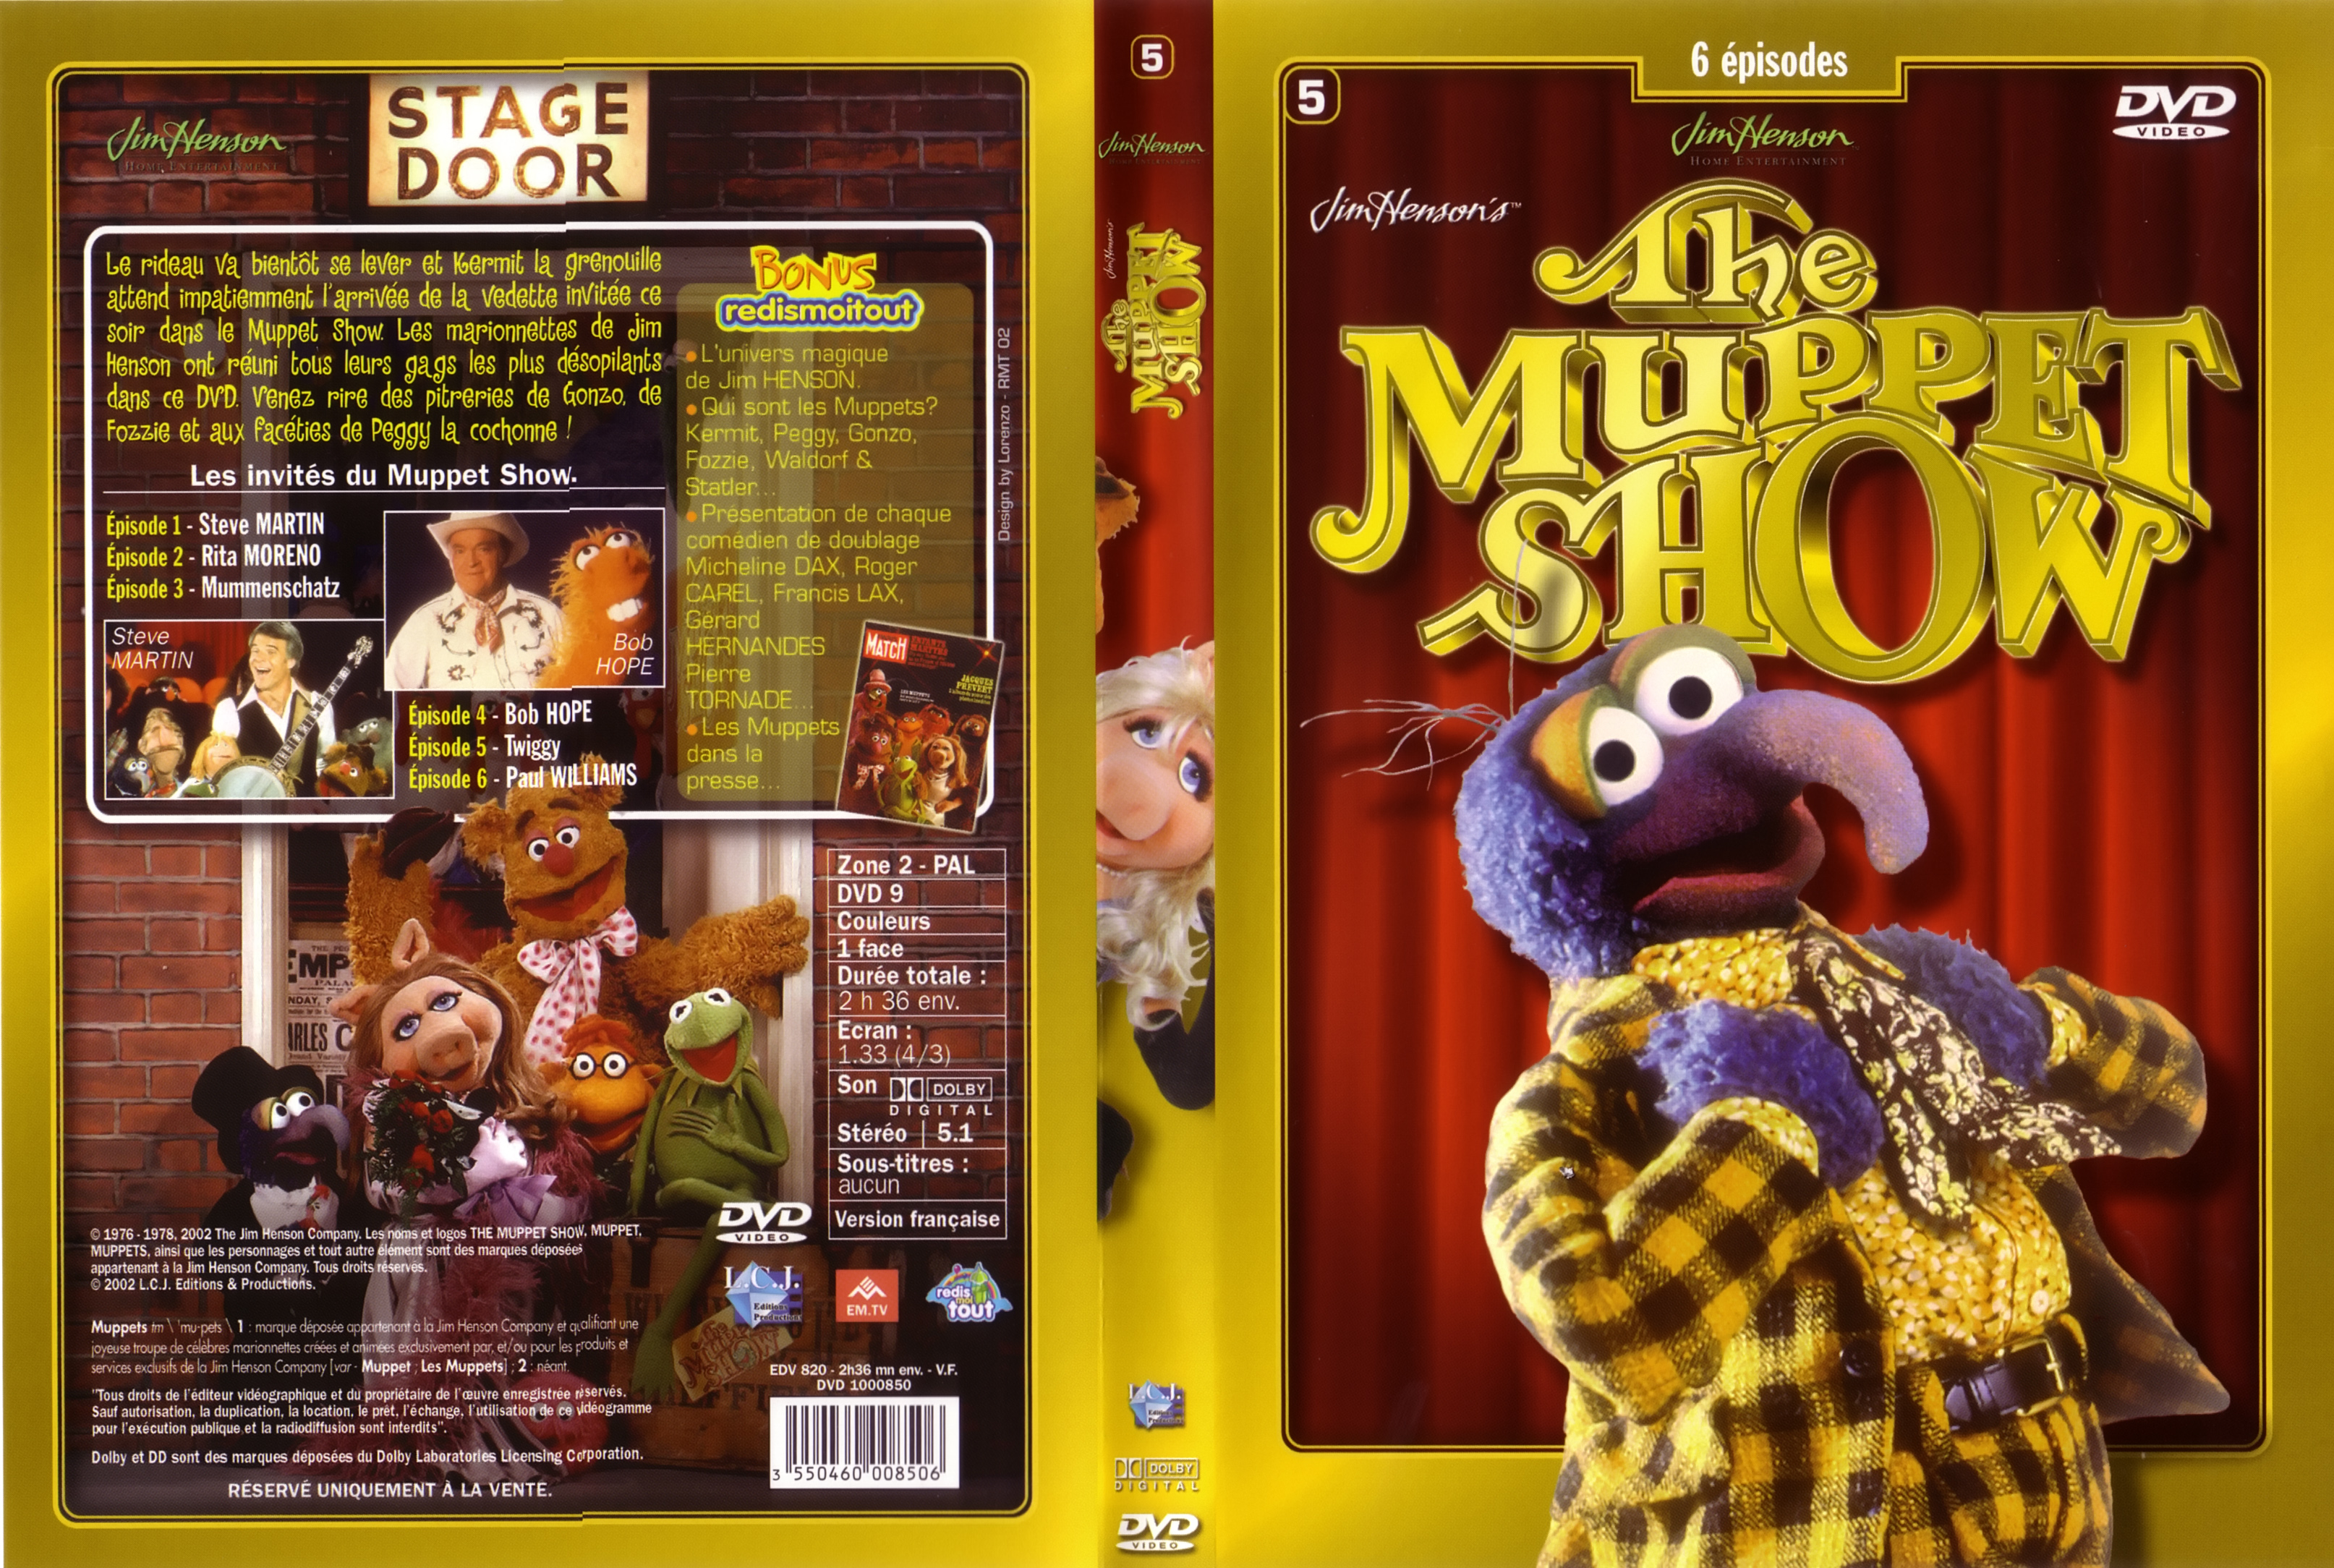 Jaquette DVD The muppet show vol 1 DVD 5